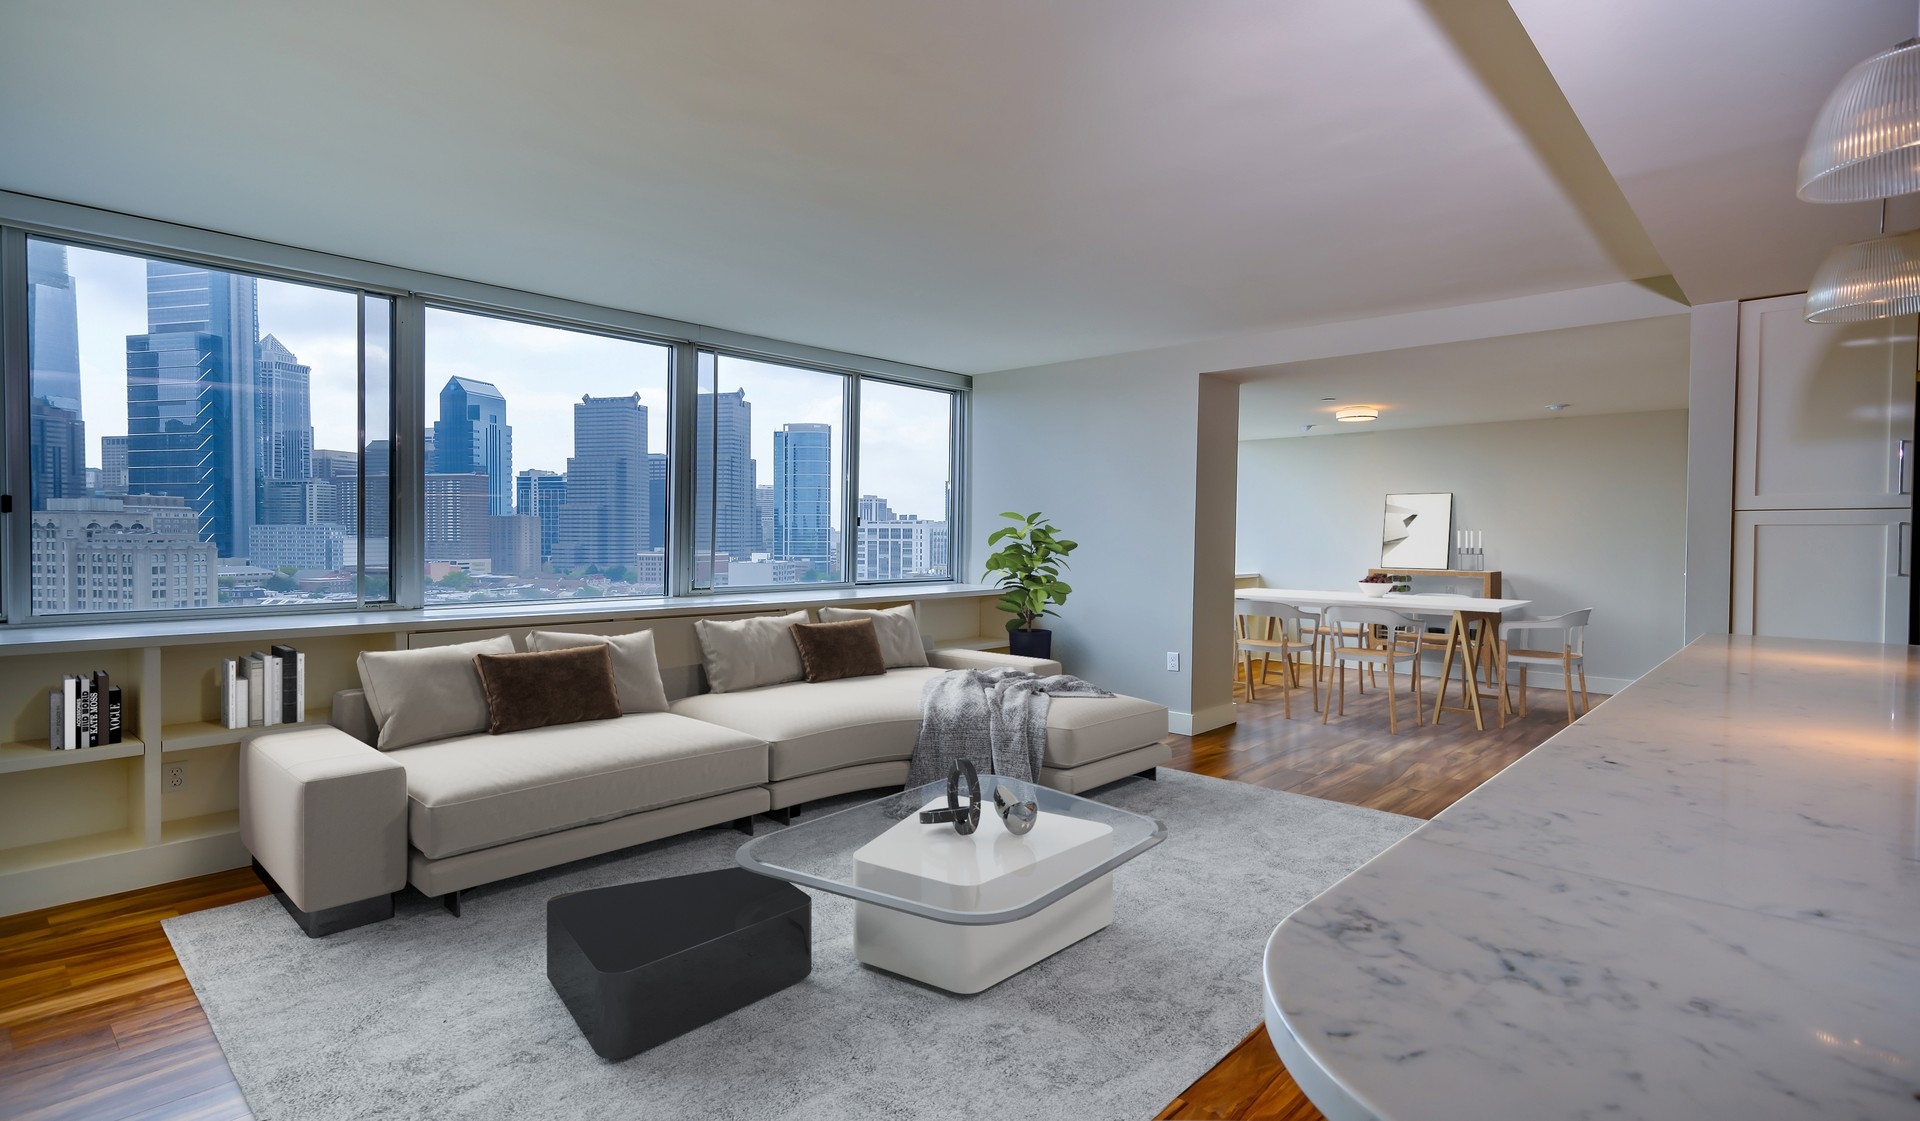 Park Towne Place - Apartments in Philadelphia, PA - Penthouse Interior